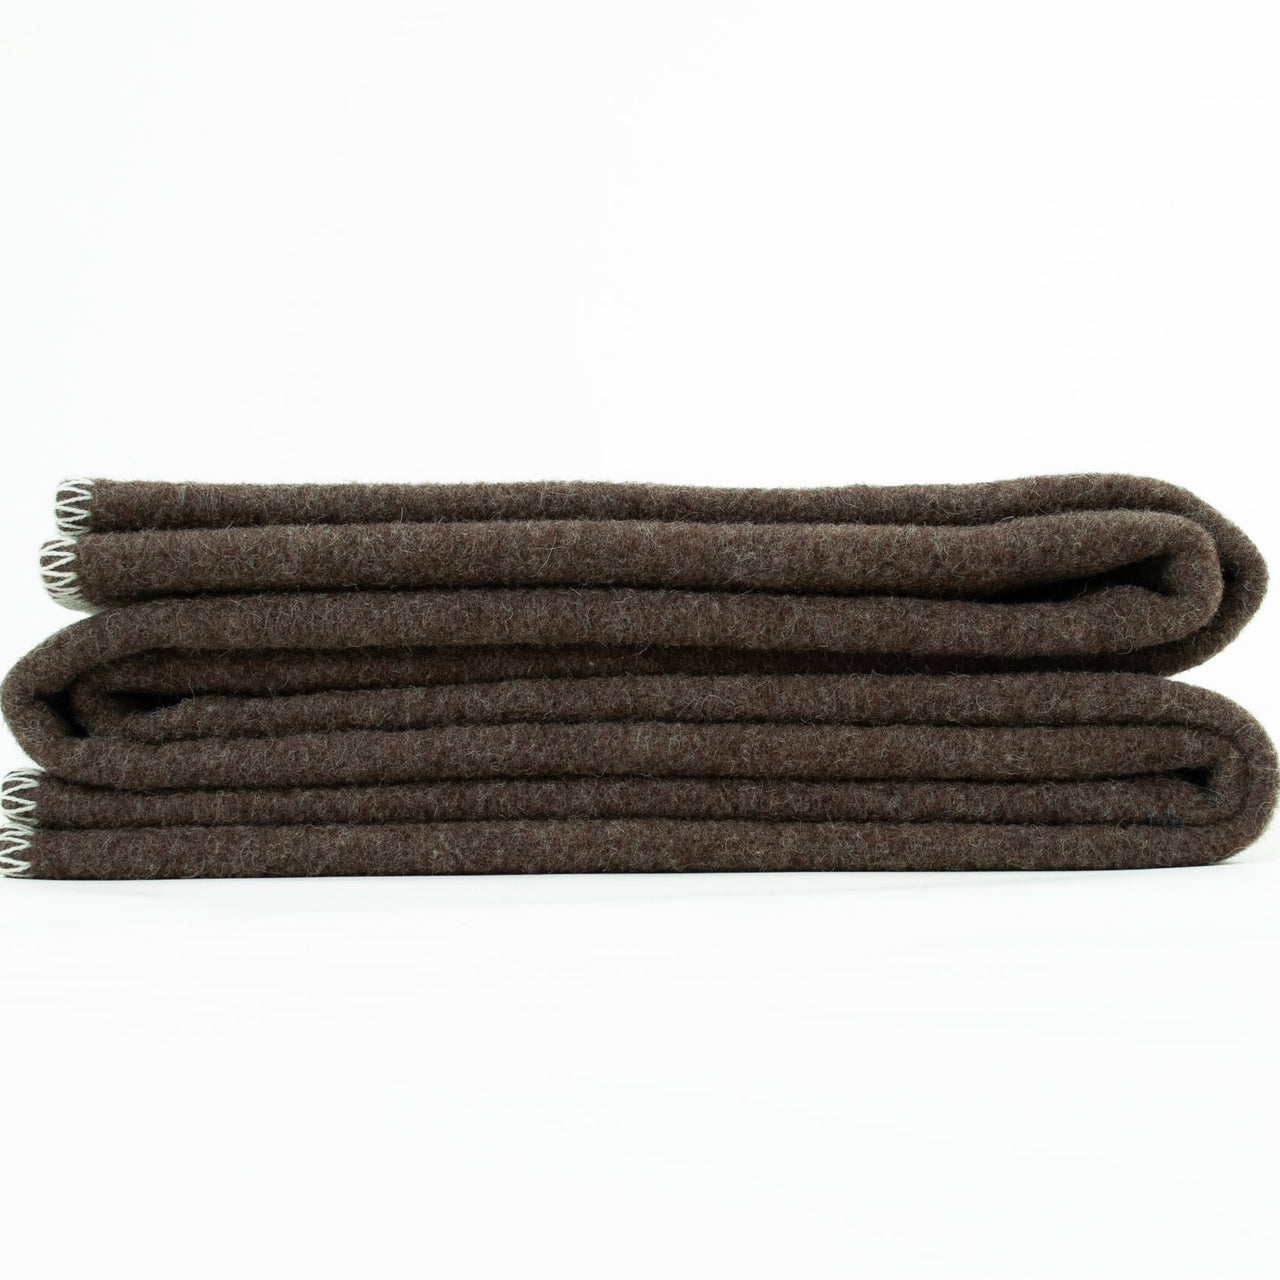 Brown Whipstitch Wool Blanket – Pure Soft Sheep Wool Blanket